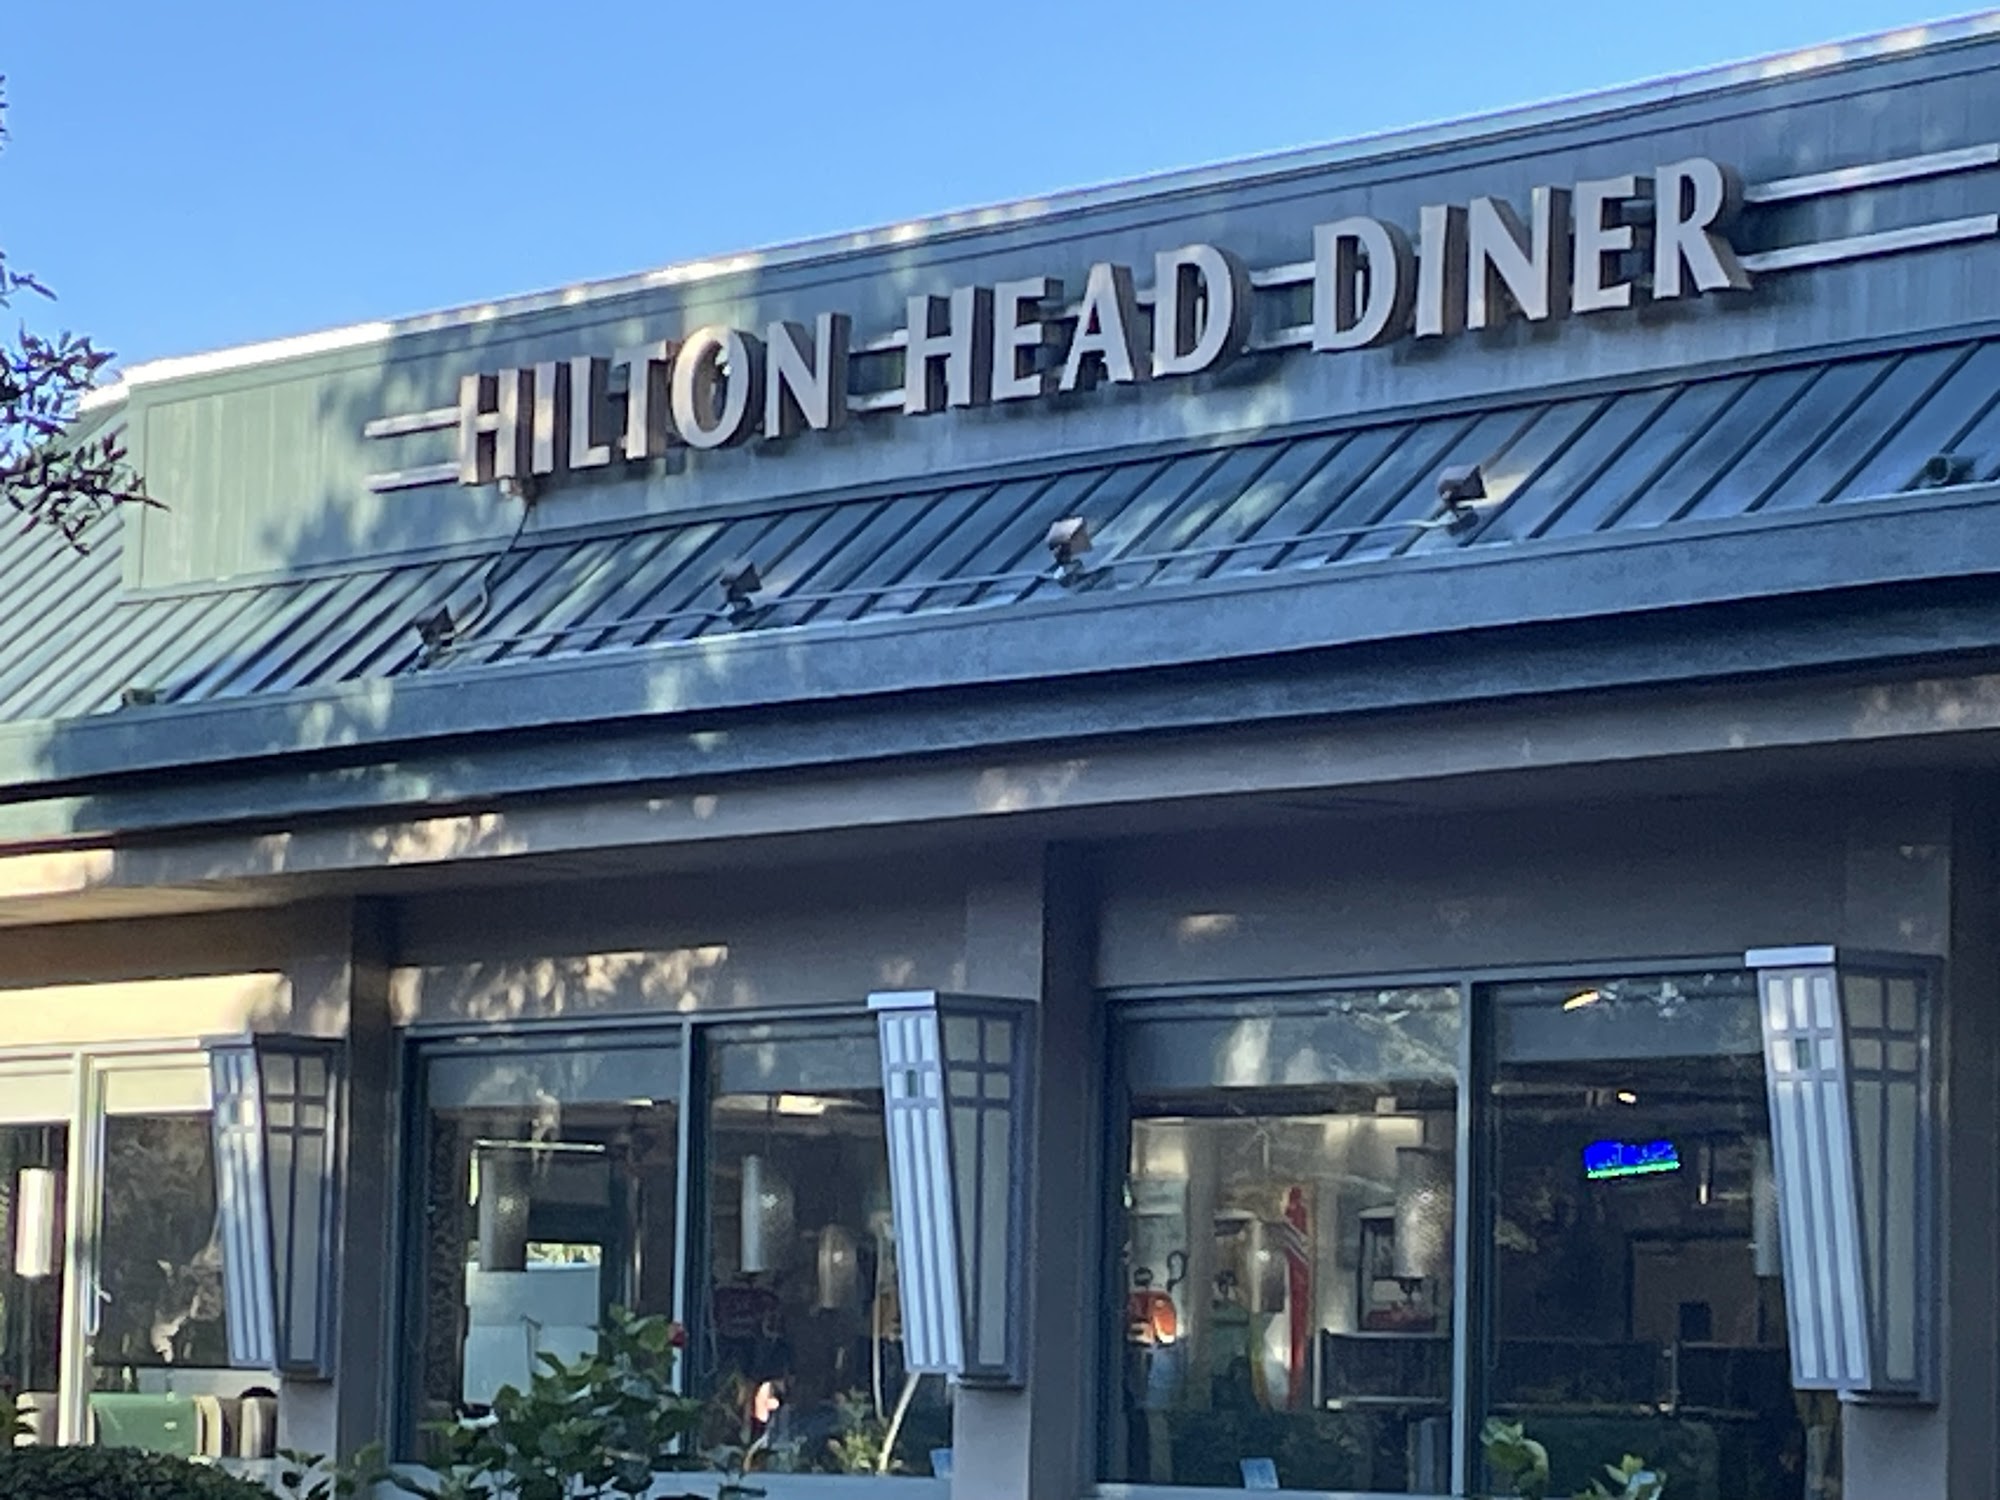 Hilton Head Diner Restaurant